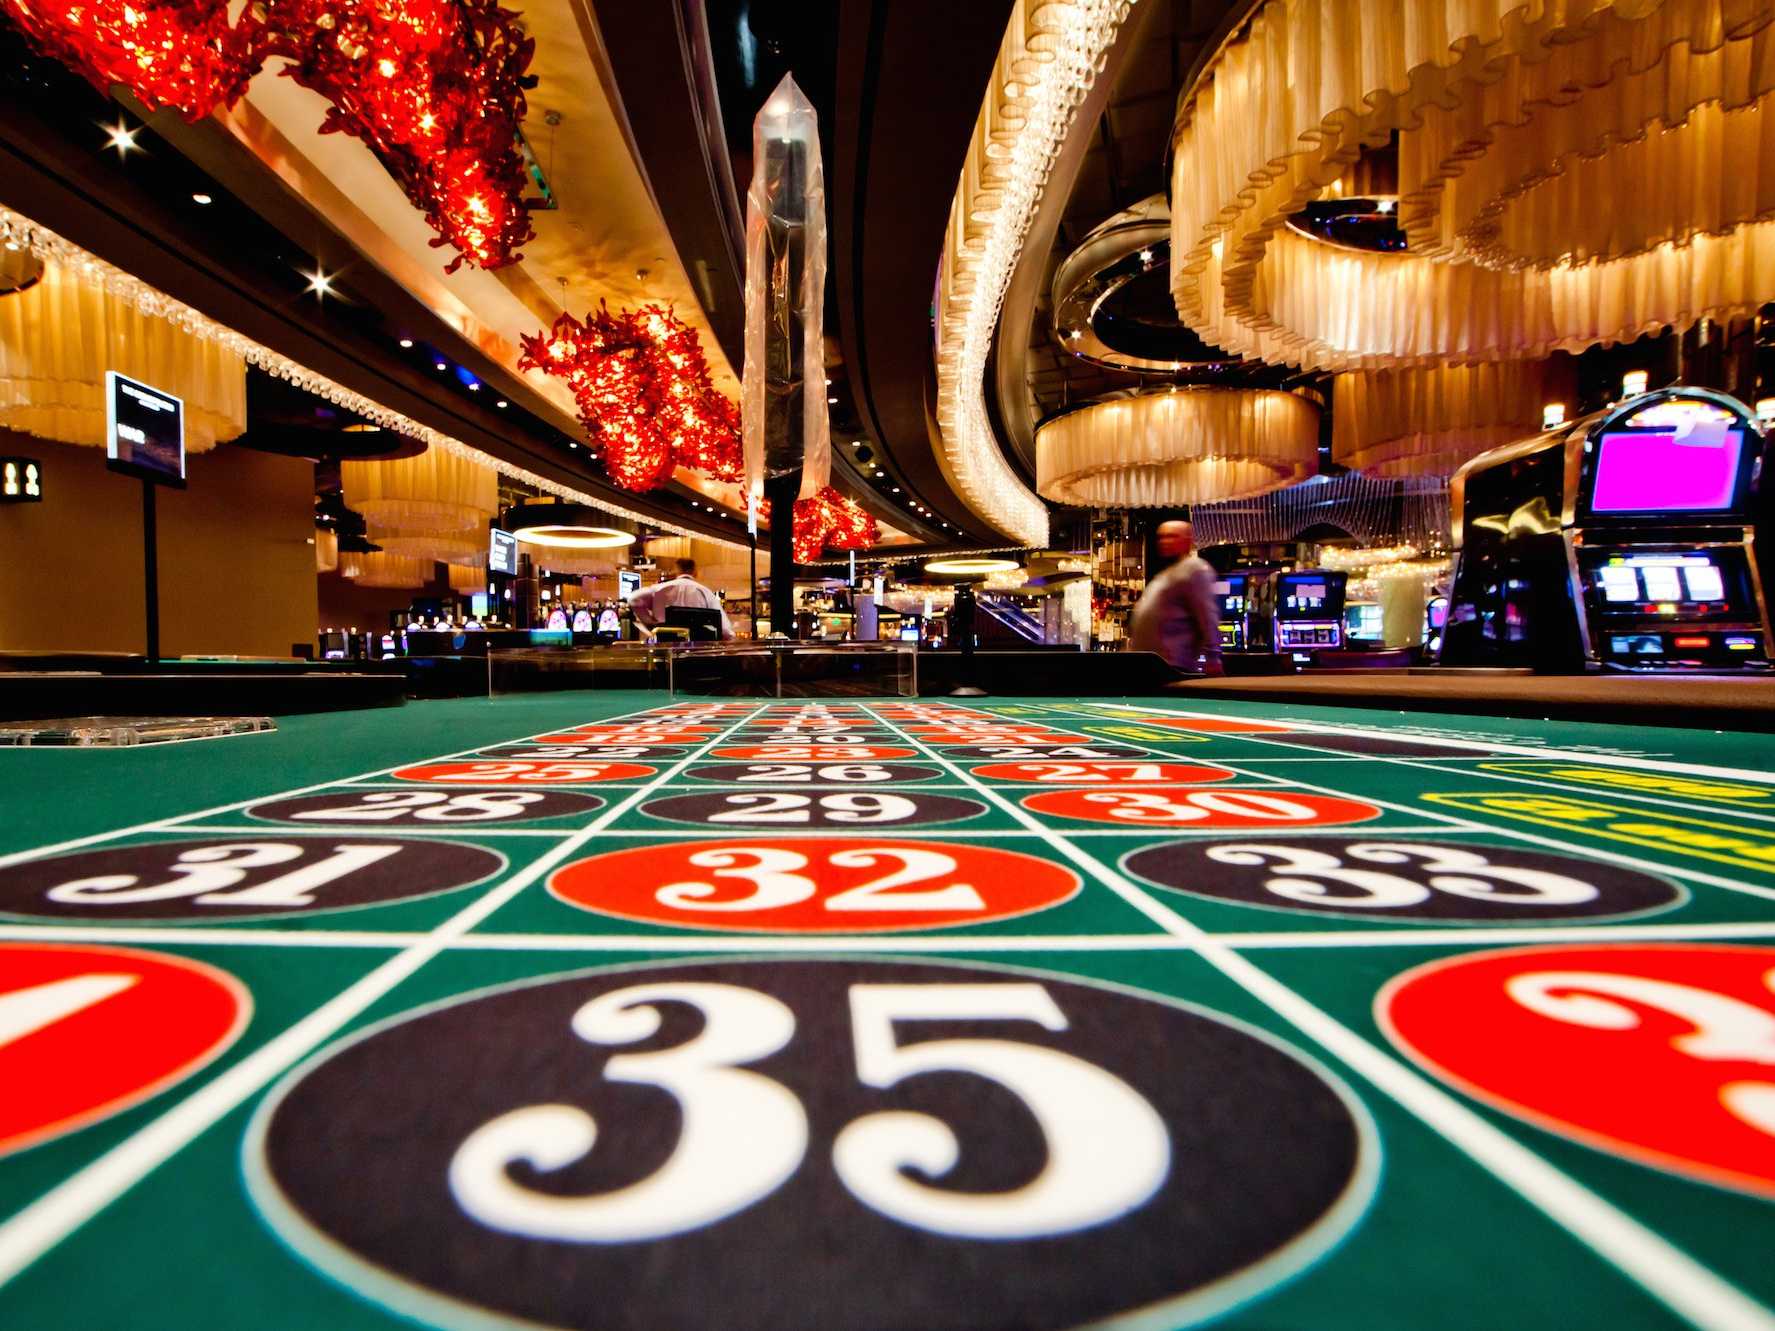 How much do casinos make?